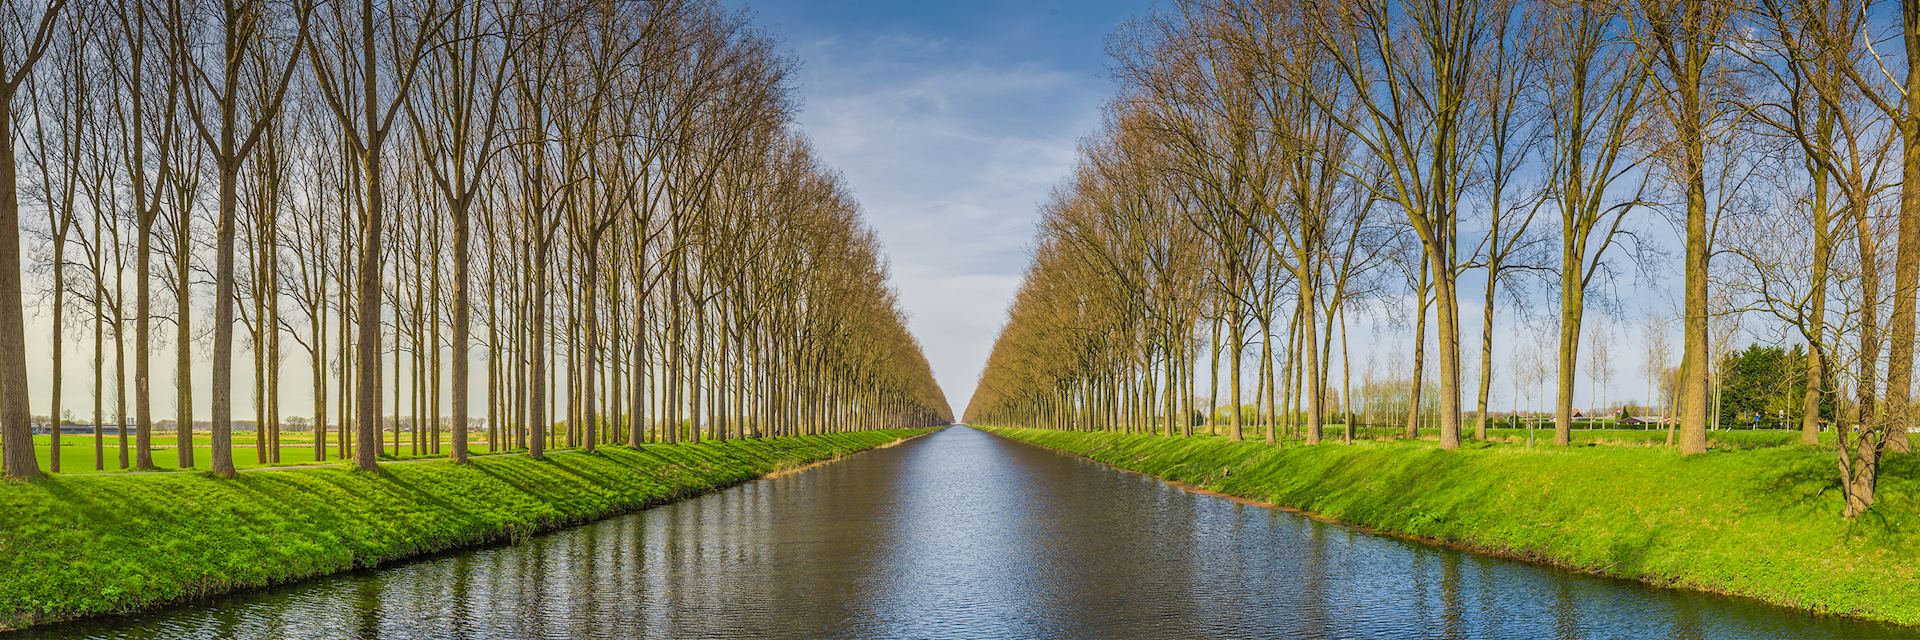 Damme Canal, Flanders, Belgium